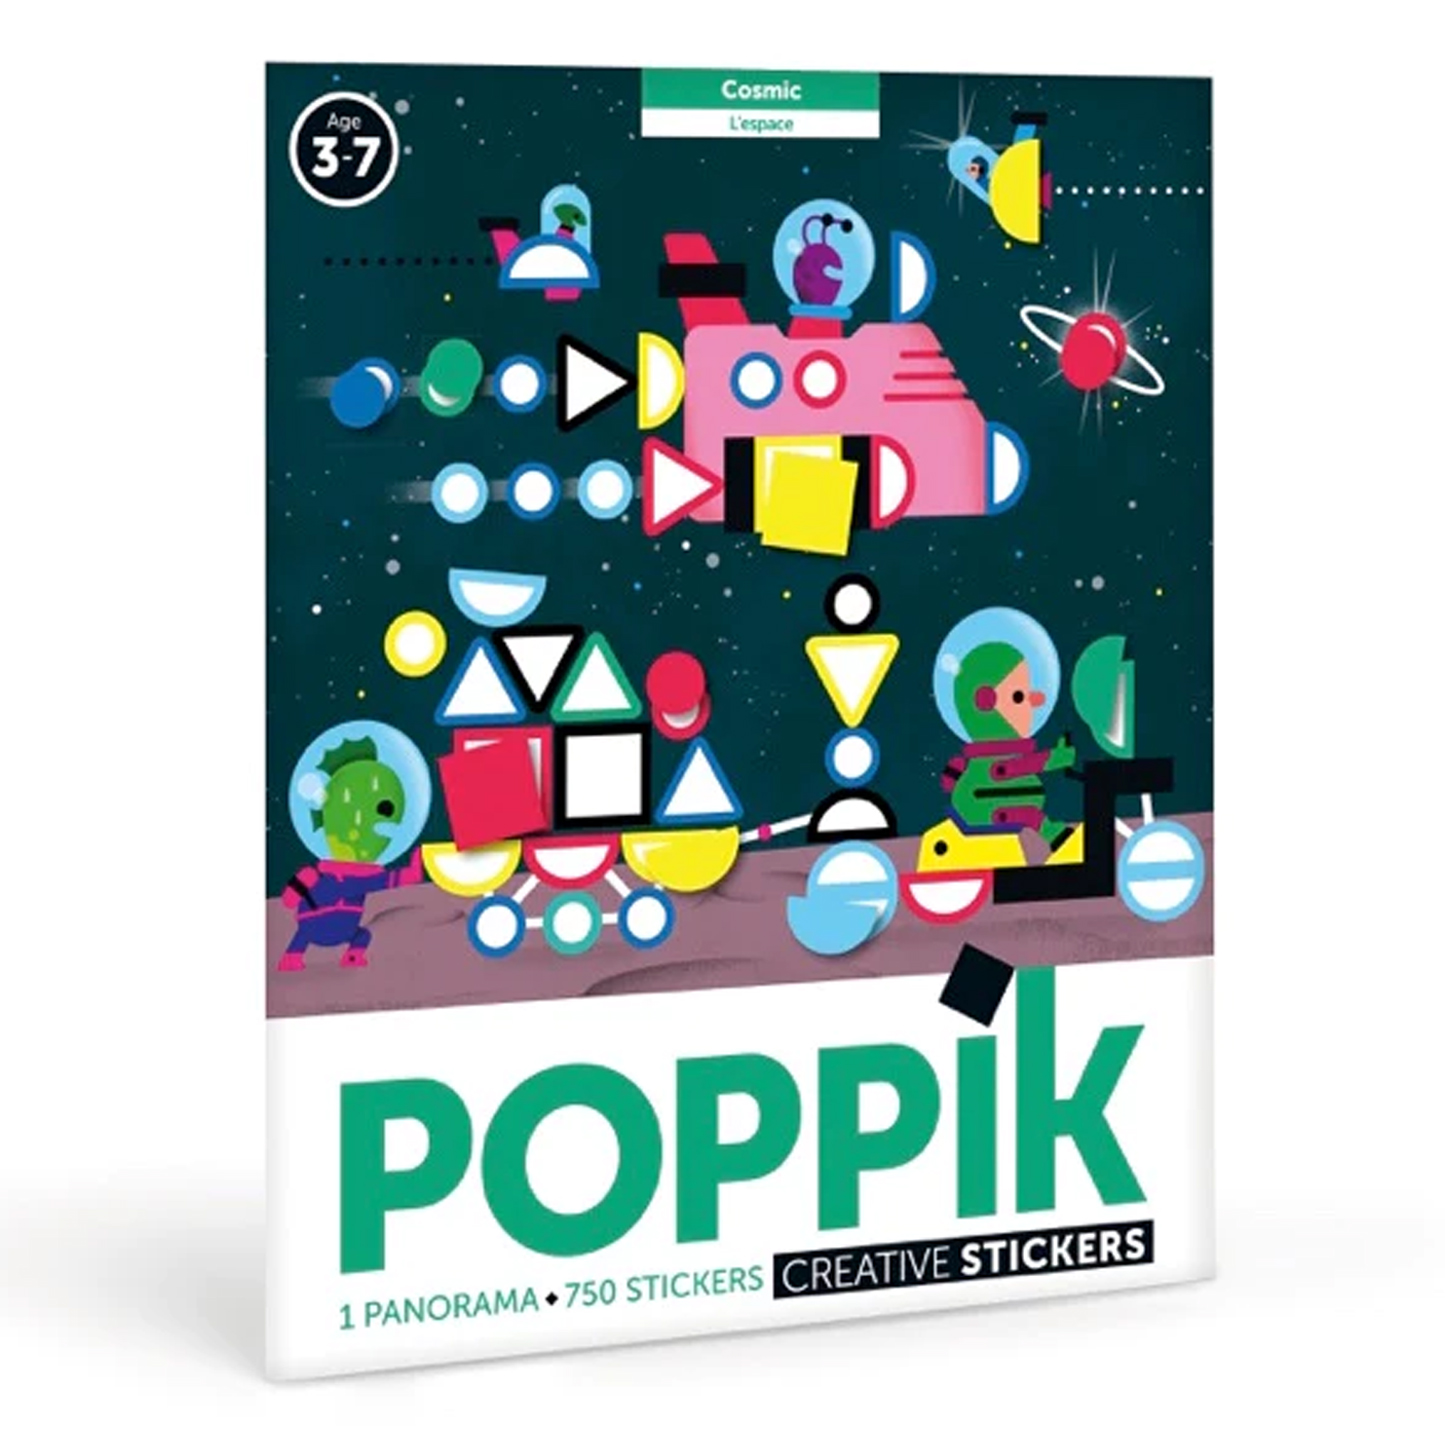  Poppik Panorama Sticker Poster - Cosmic